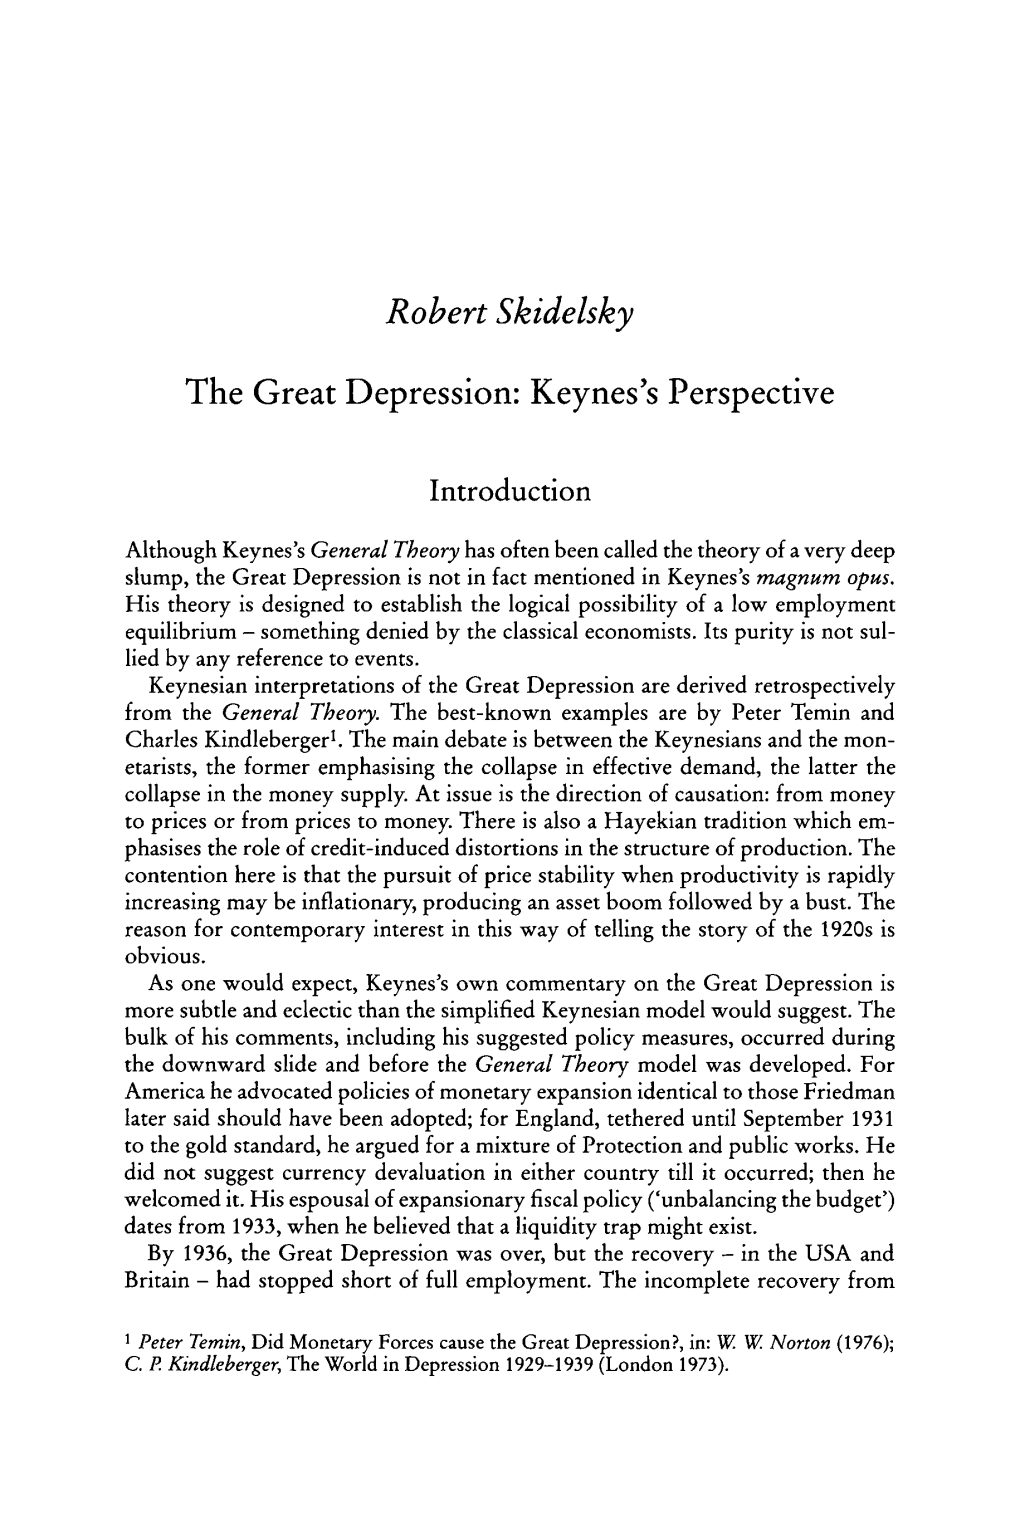 Robert Skidelsky the Great Depression